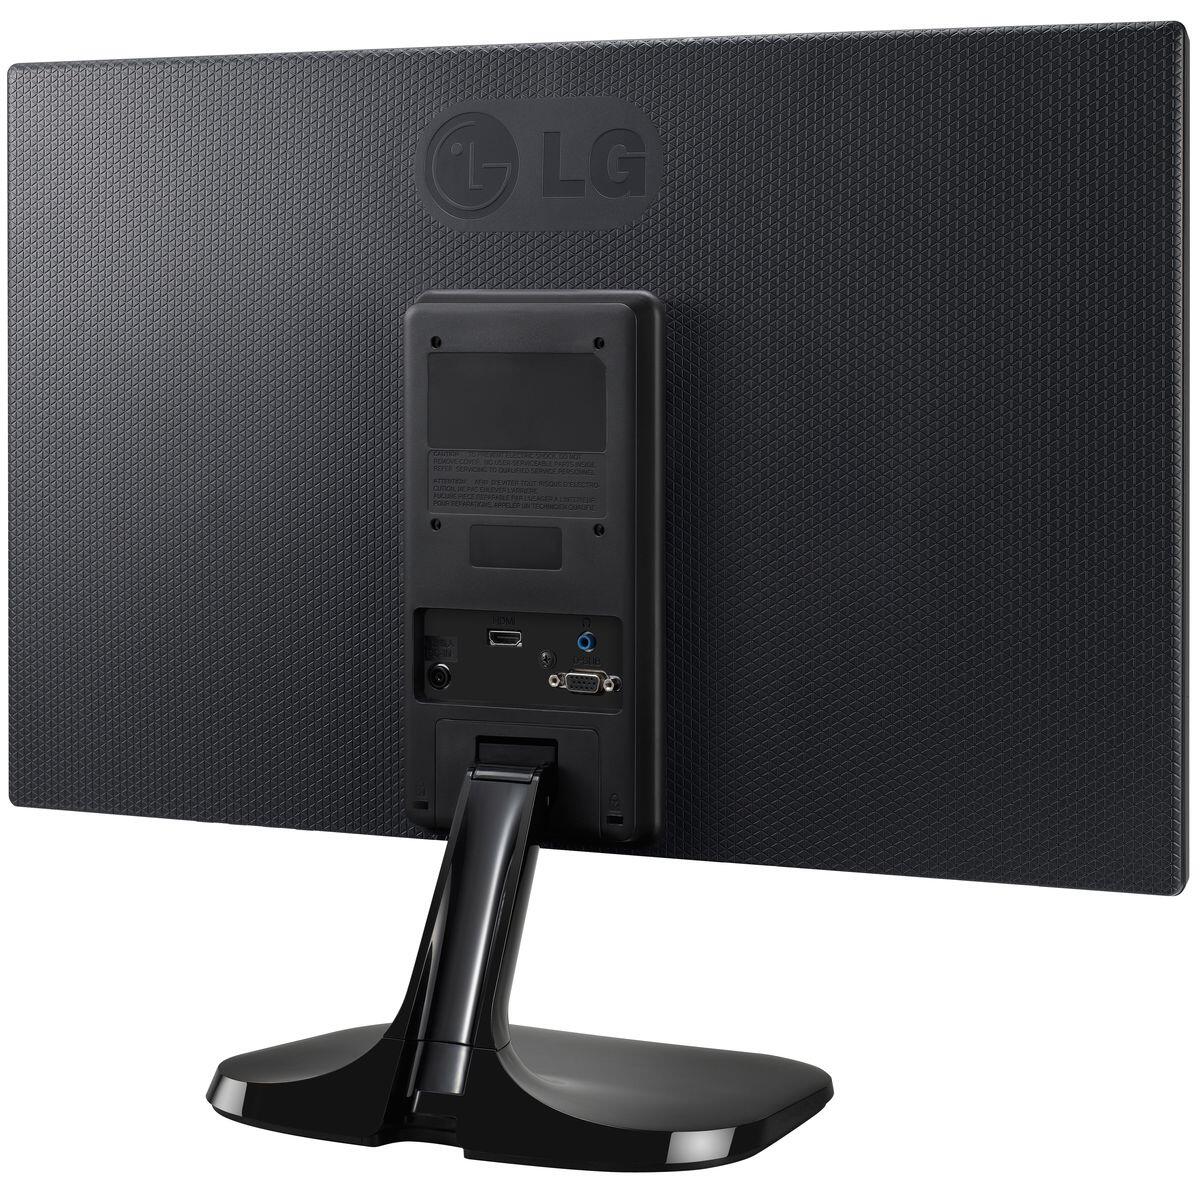 LG 24" Wide Monitor  - Refurbished